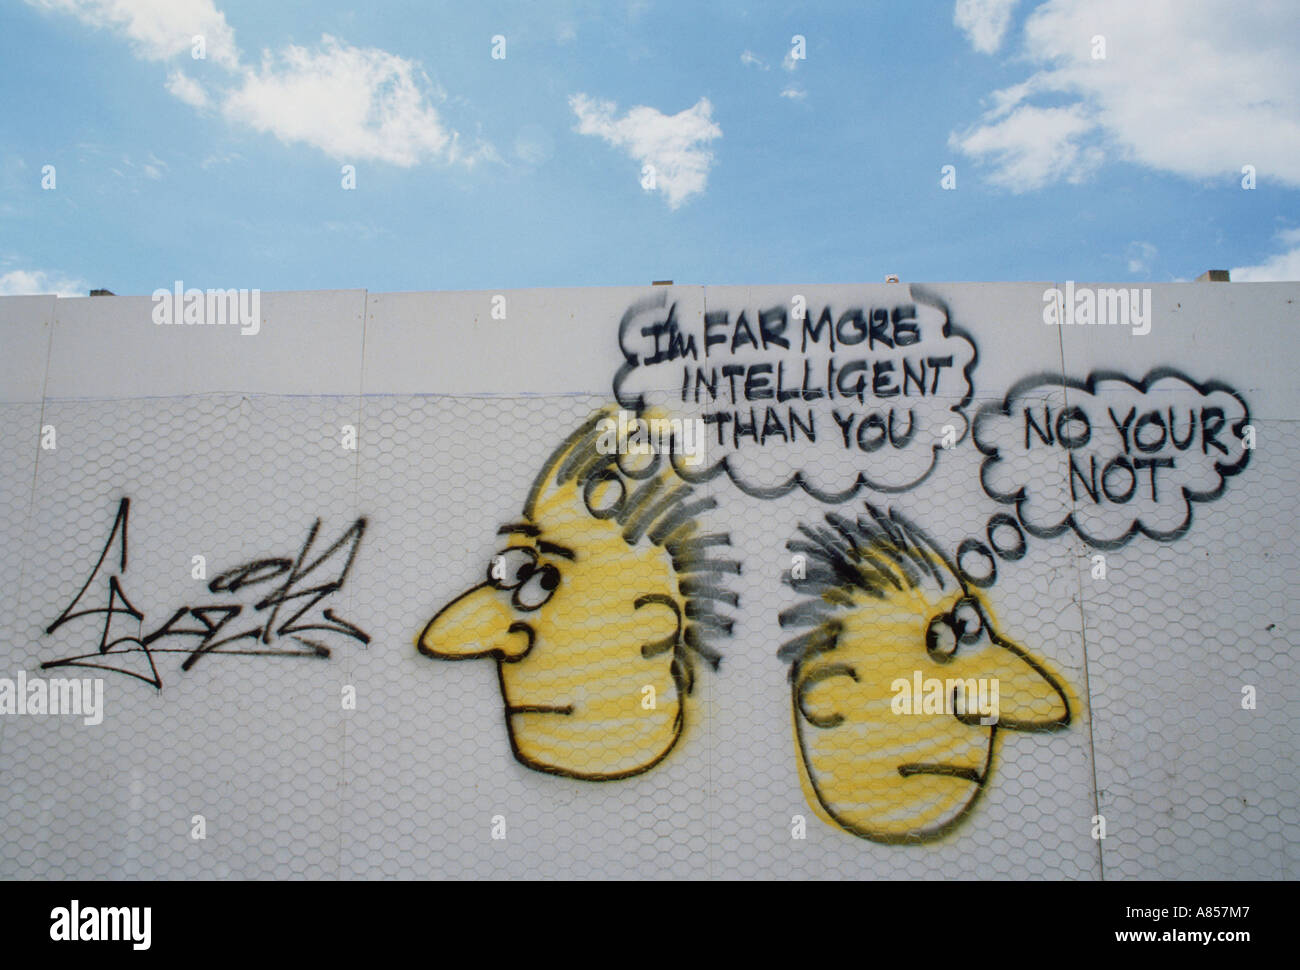 Artwork. Graffiti message painted on wall. Comical cartoon 'Intelligence'. Stock Photo